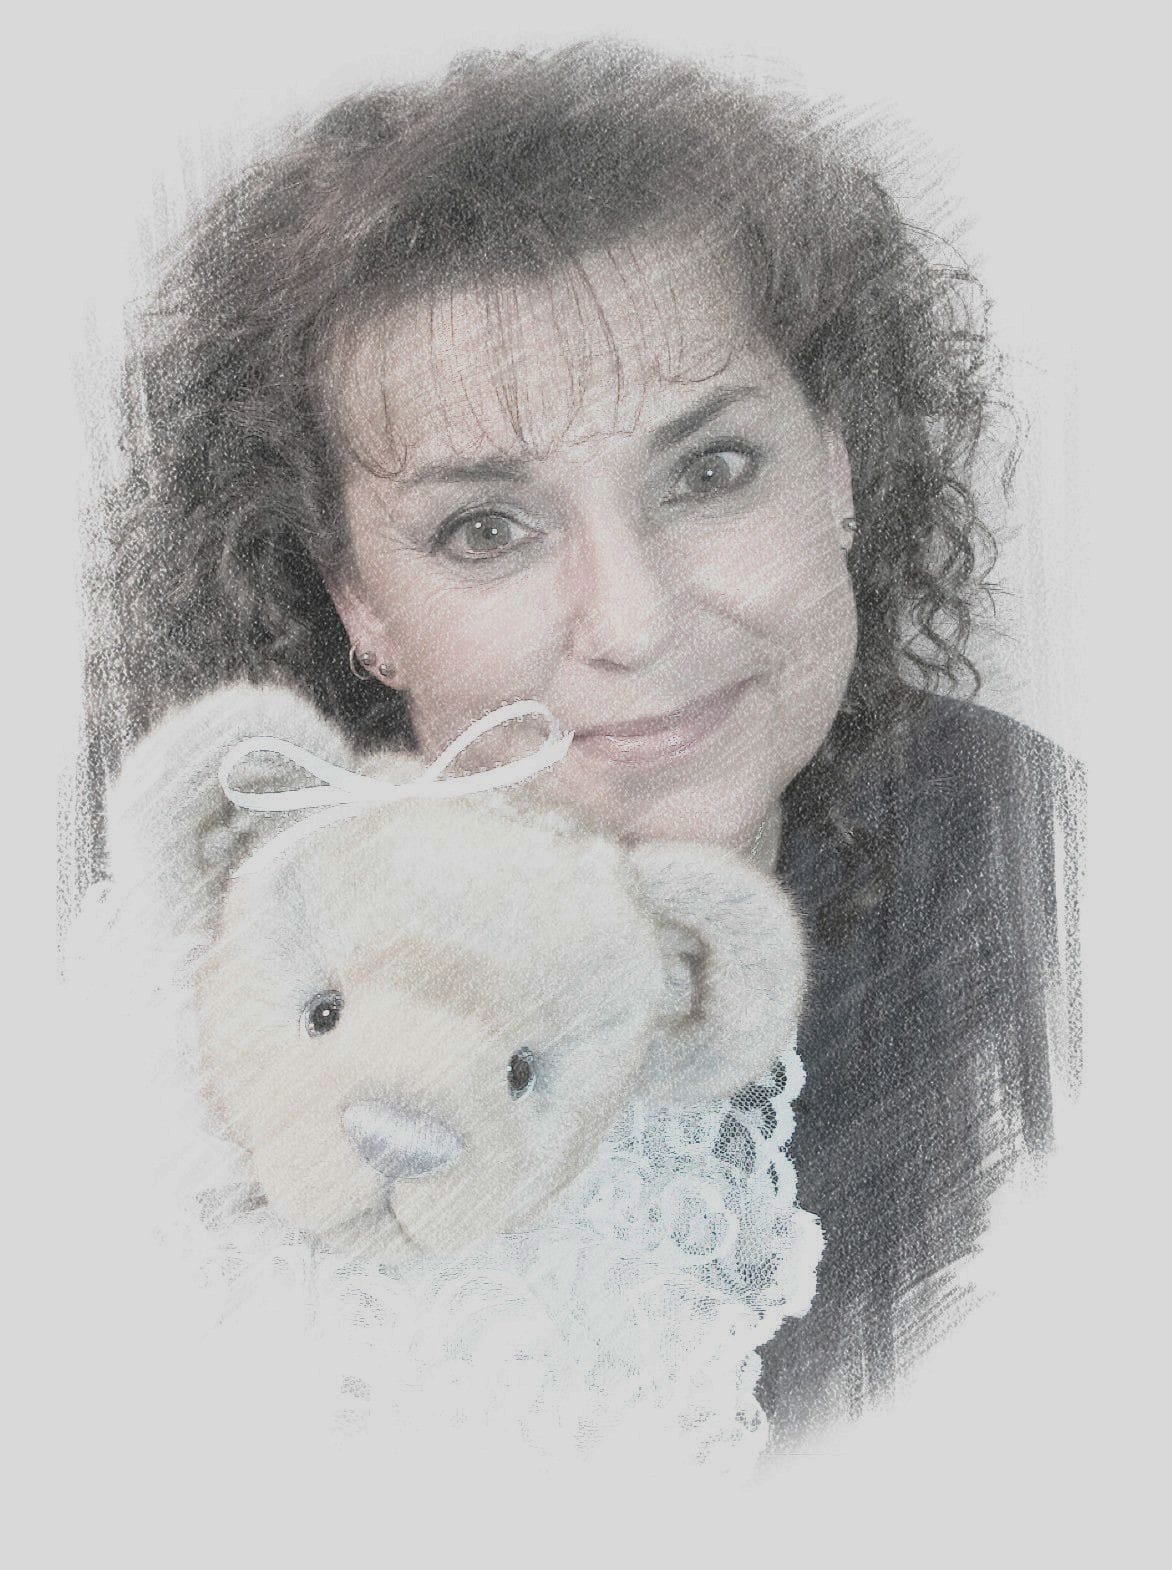 Brenda Parker-designer and creator of BrendaBears, hand crafted artist bears